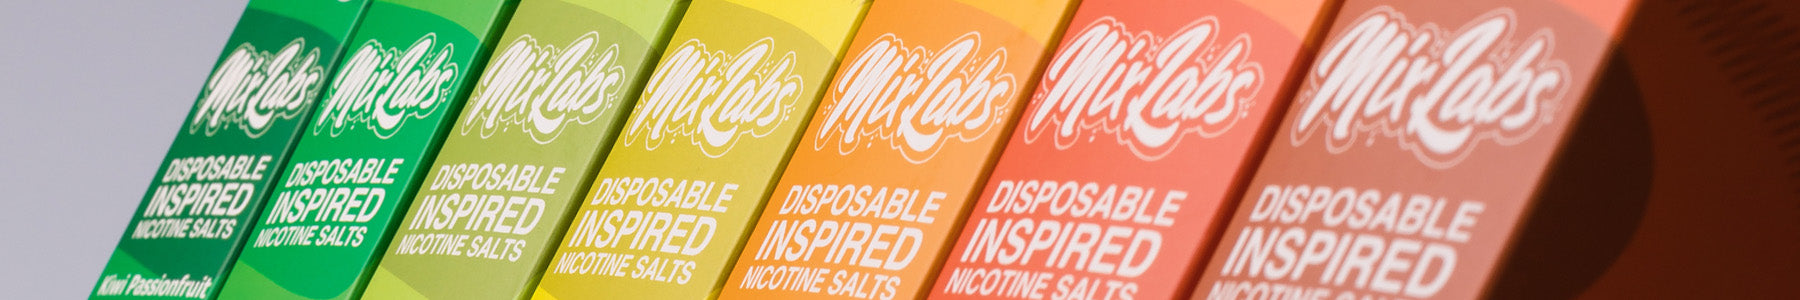 Disposable Inspired Nicotine Salts